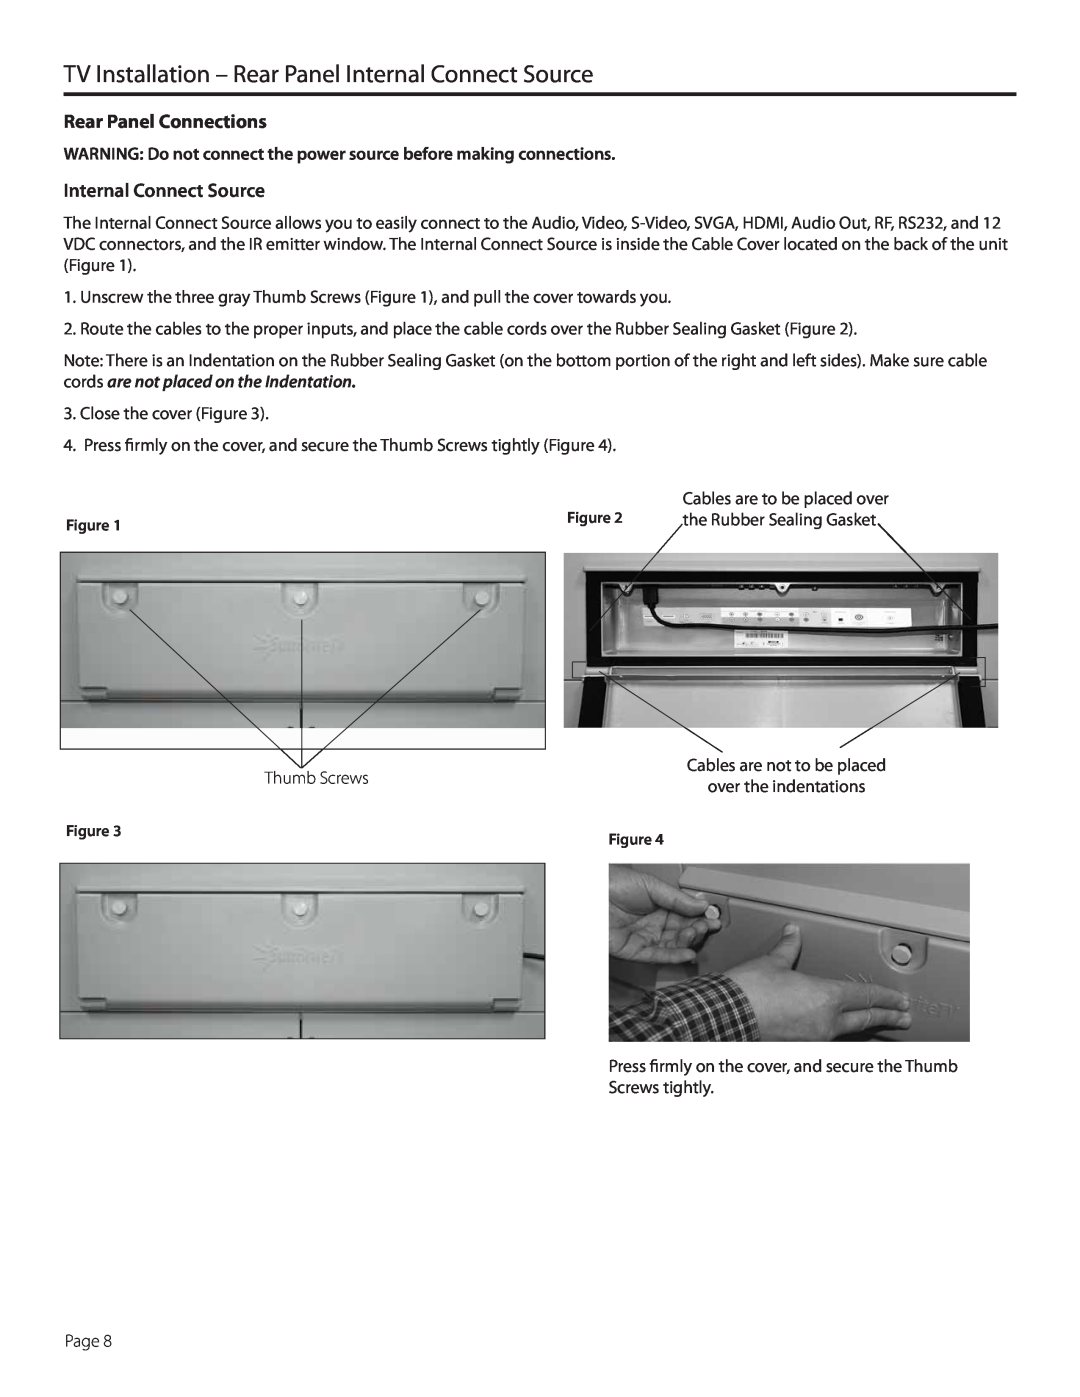 SunBriteTV SB-5560HD-SL manual TV Installation - Rear Panel Internal Connect Source, Rear Panel Connections, Thumb Screws 